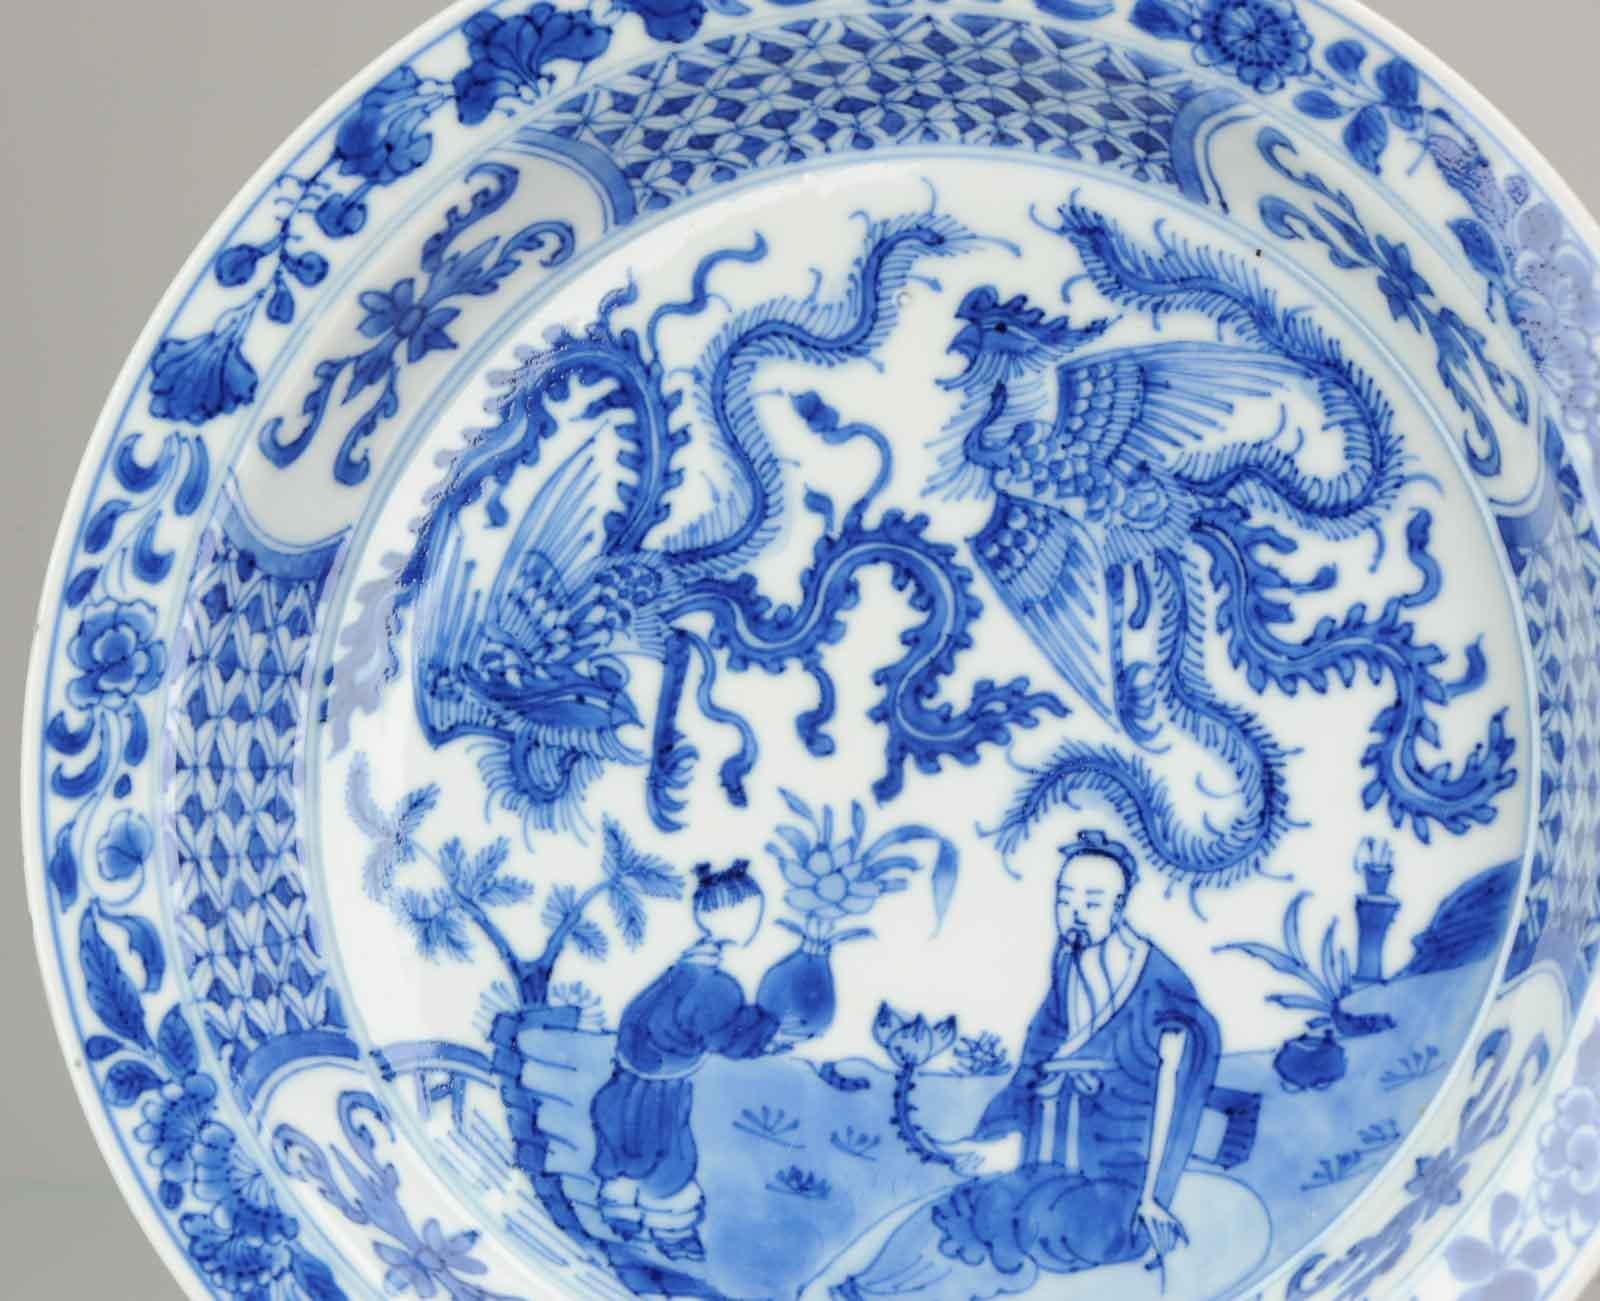 Kangxi-Porzellanteller mit Phönix-Figuren:: Marke Lingzhi Fungus:: um 1700 5